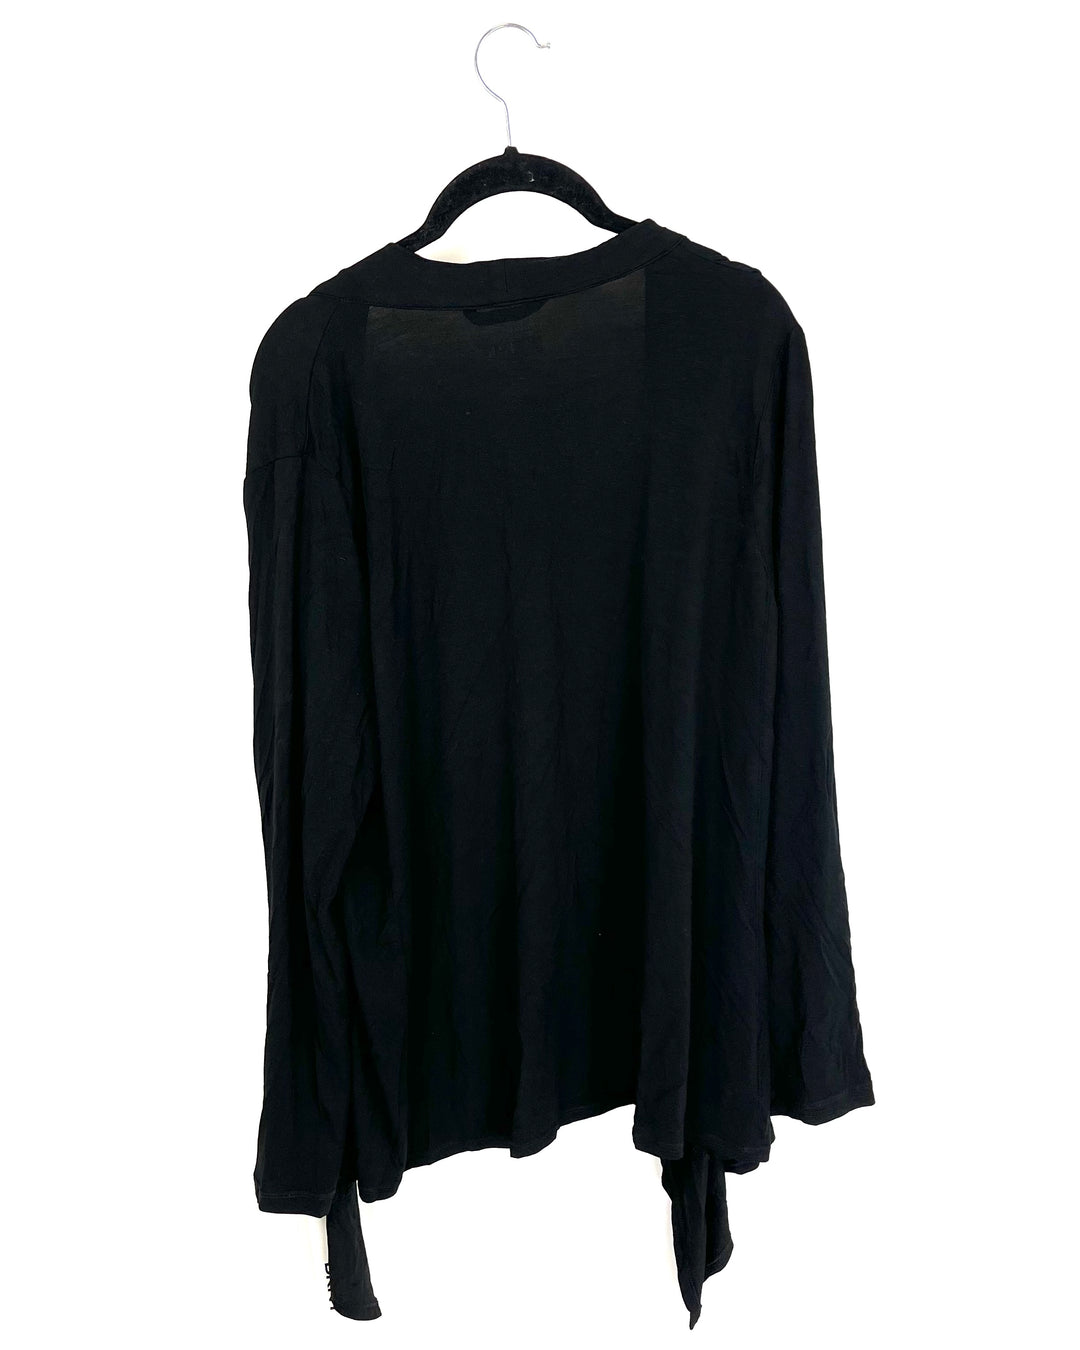 Black Long Sleeve Open Cardigan - Size 6/8